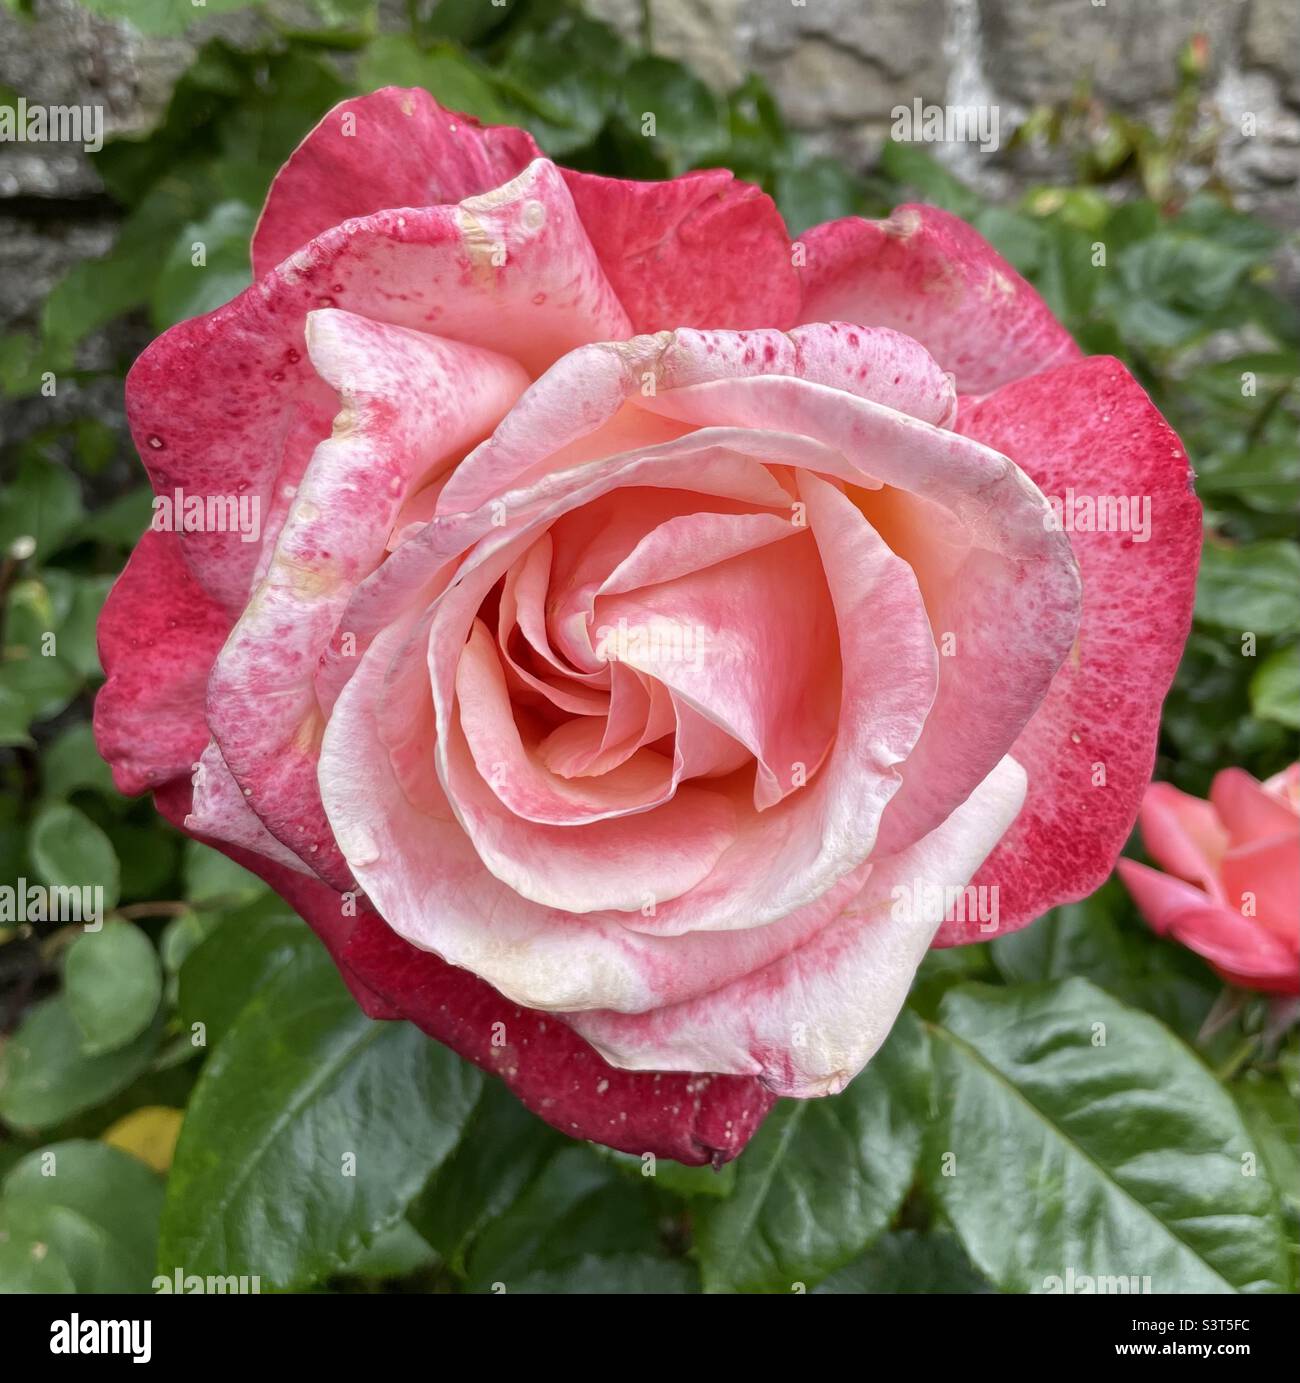 Ombré rose Stock Photo